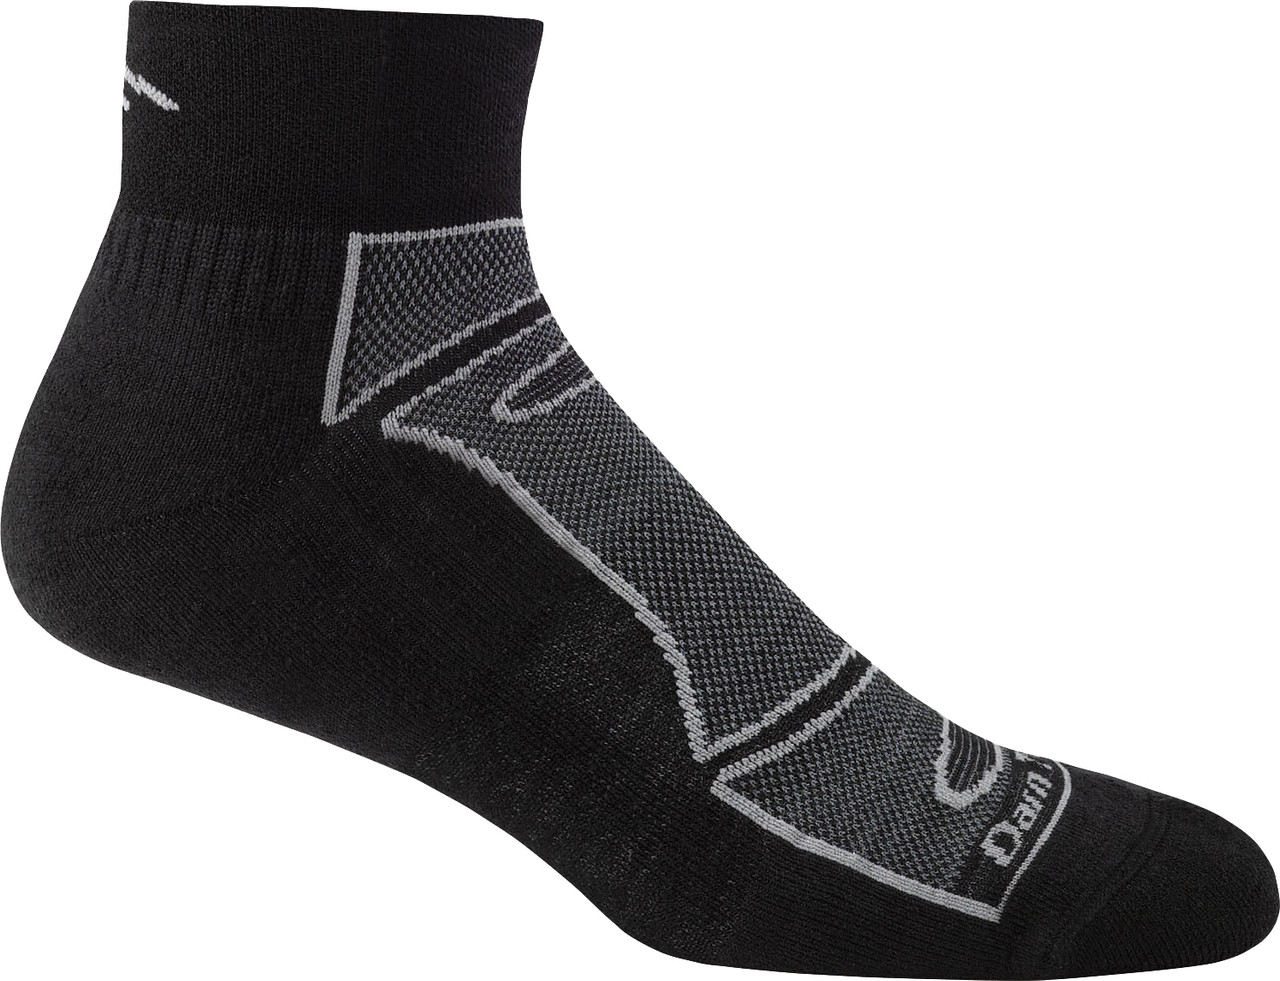 Darn Tough Endurance Light Quarter Socks - Men's | MEC